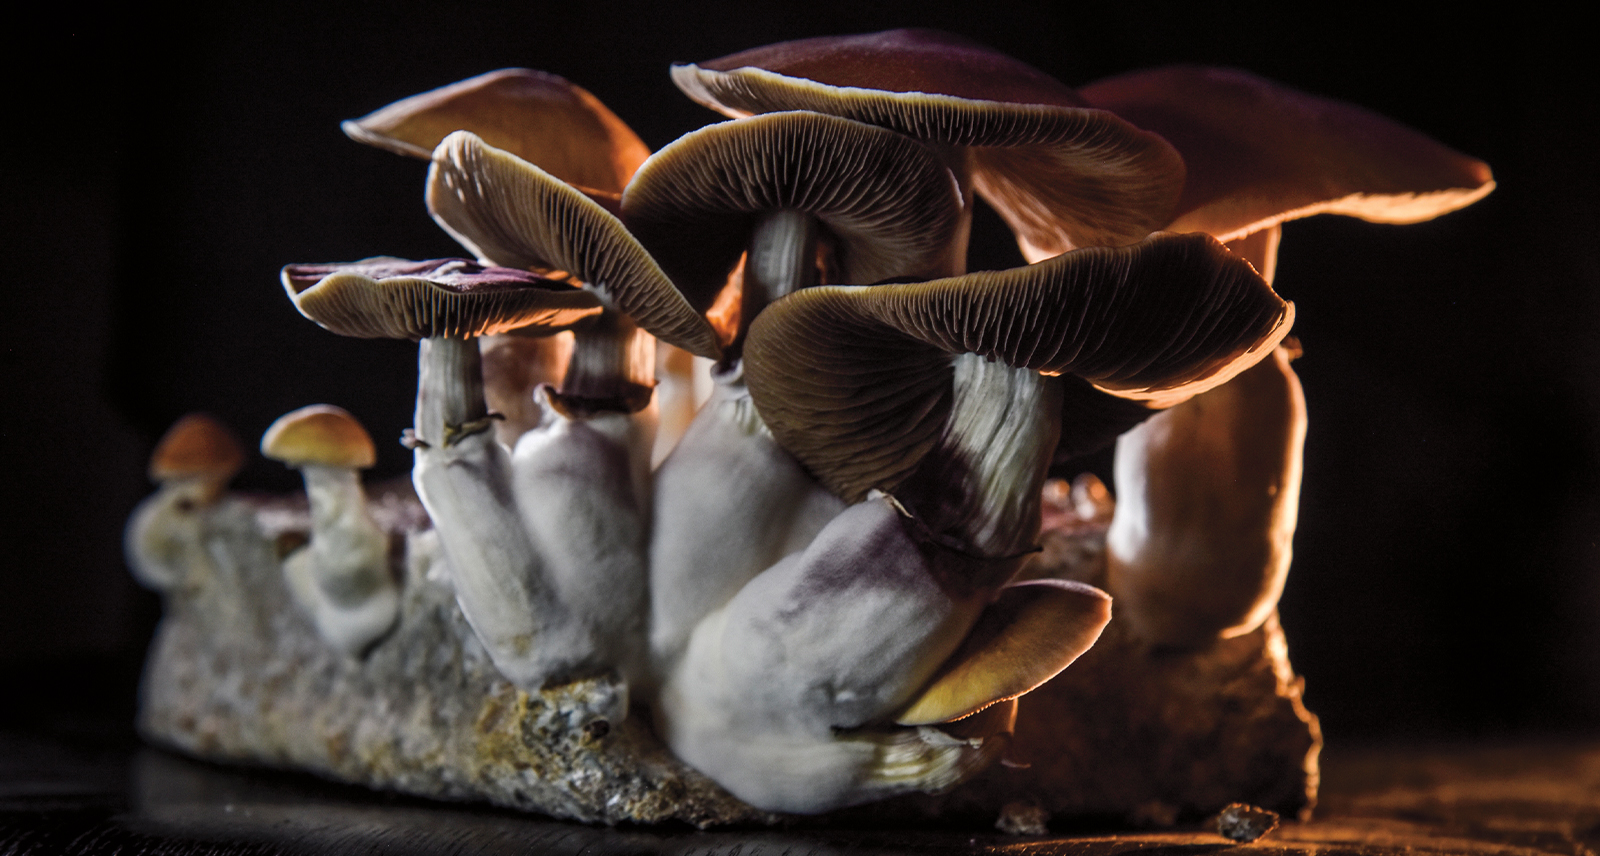 Mushrooms growing on log in backlit with black background